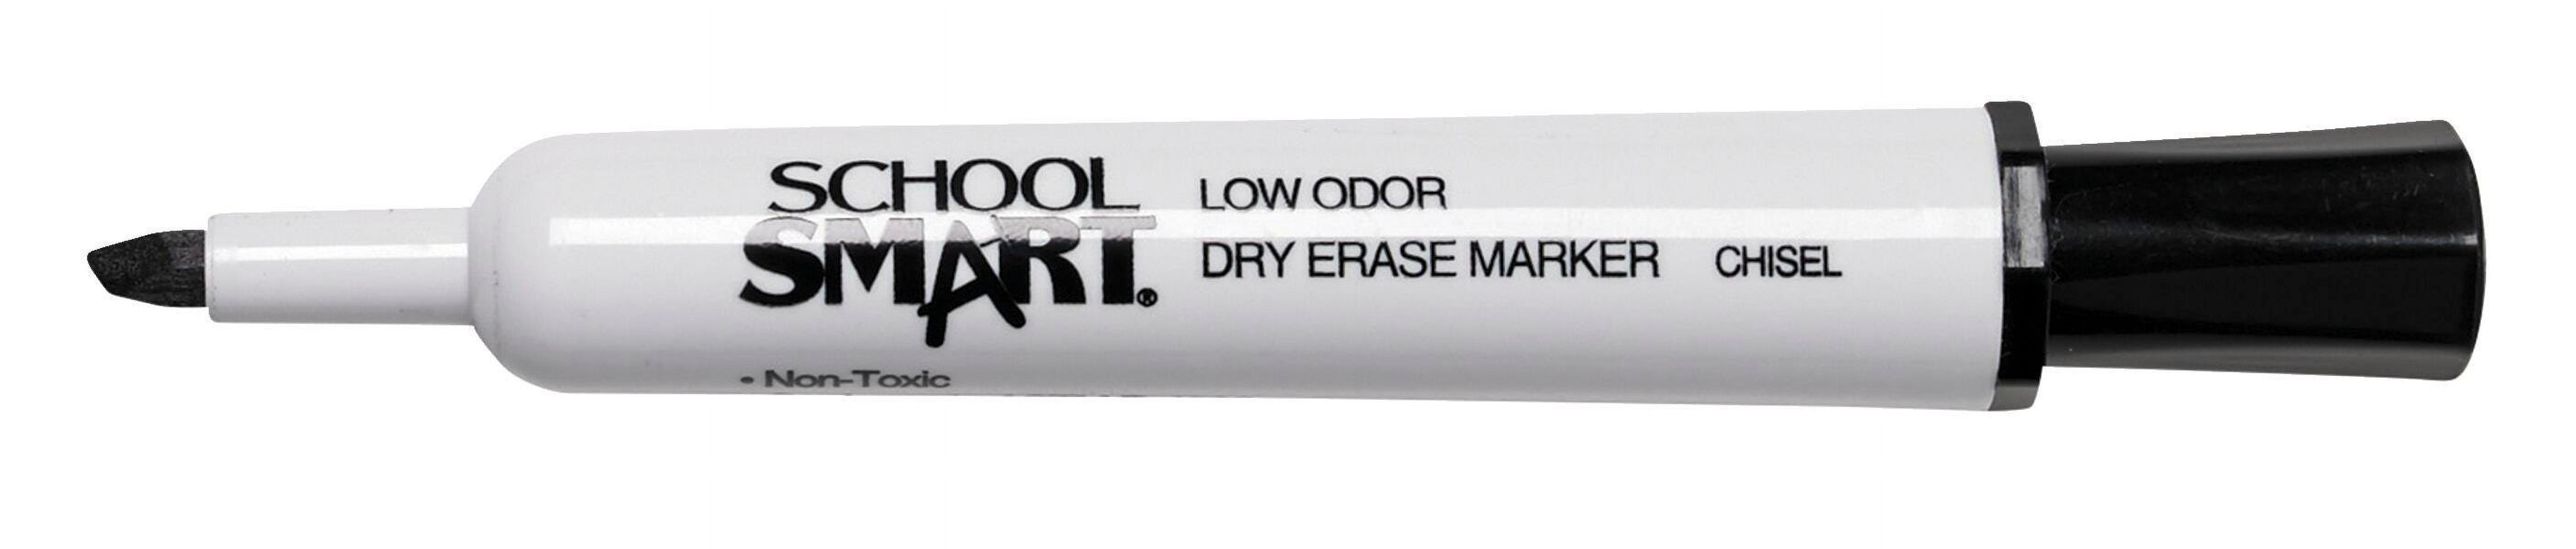 School Smart Dry Erase Markers, Chisel Tip, Low Odor, Black, Pack of 12 - image 2 of 5